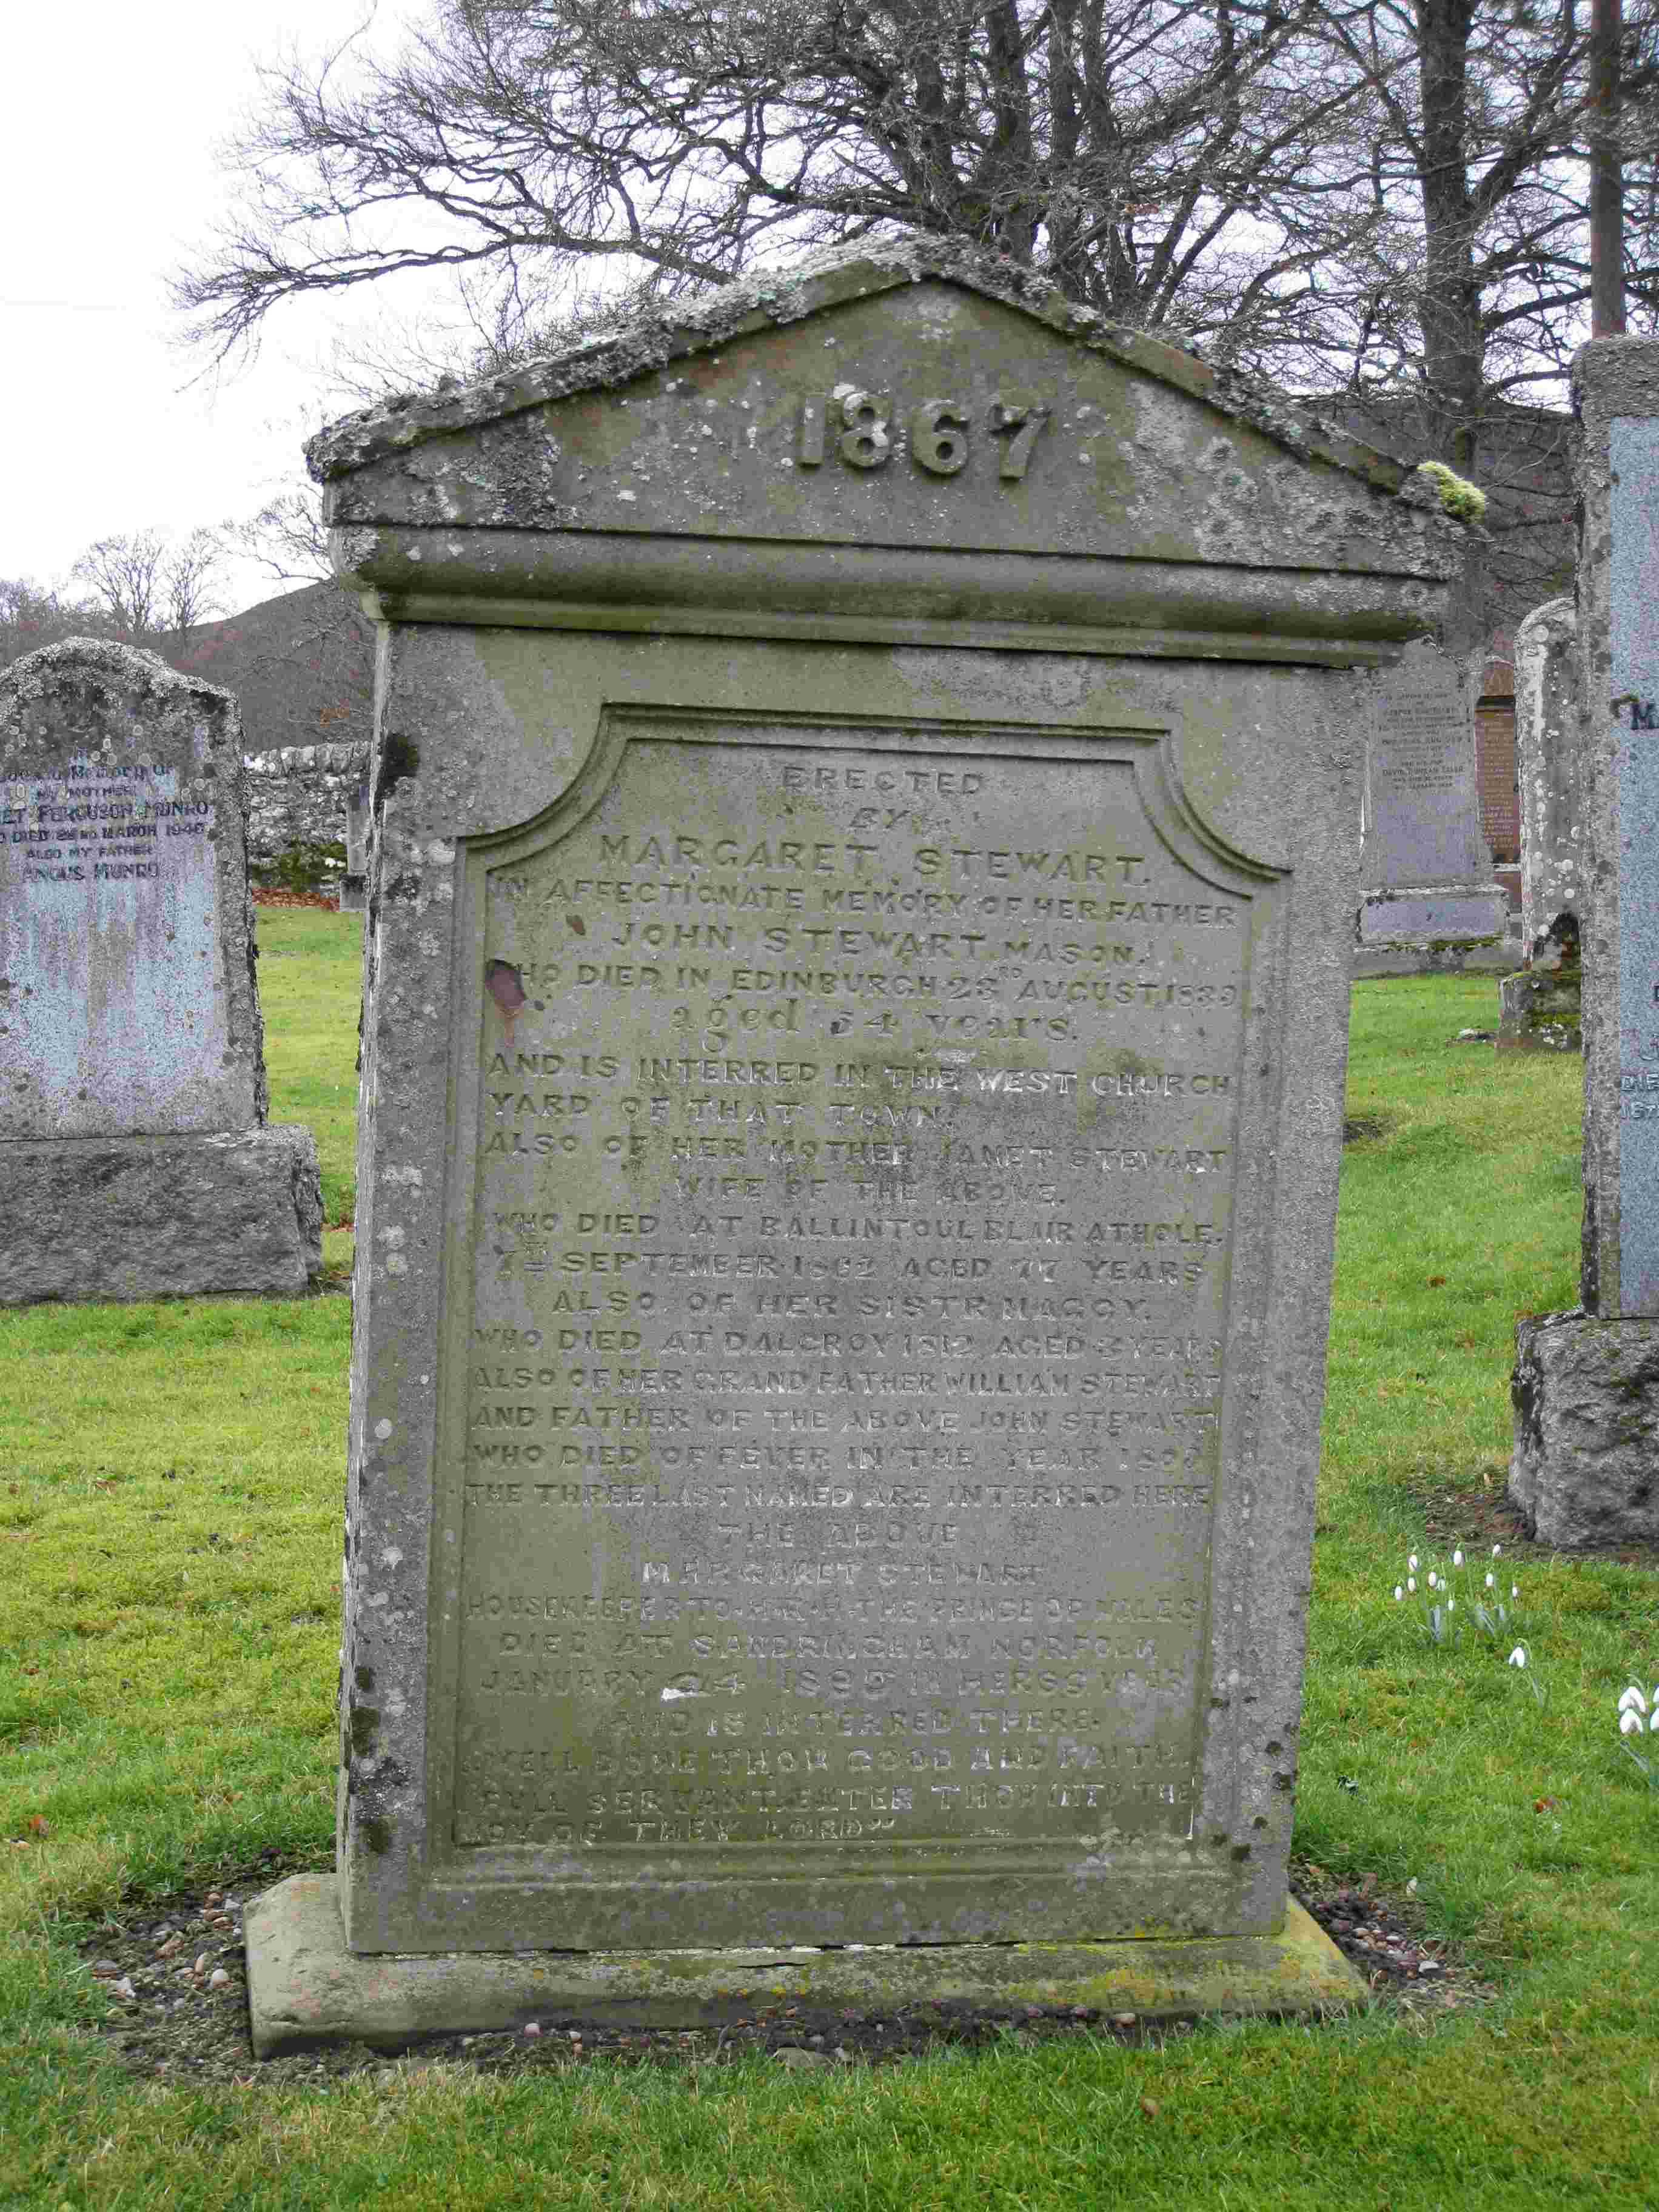 Monument to John Stewart, mason in Edinburgh